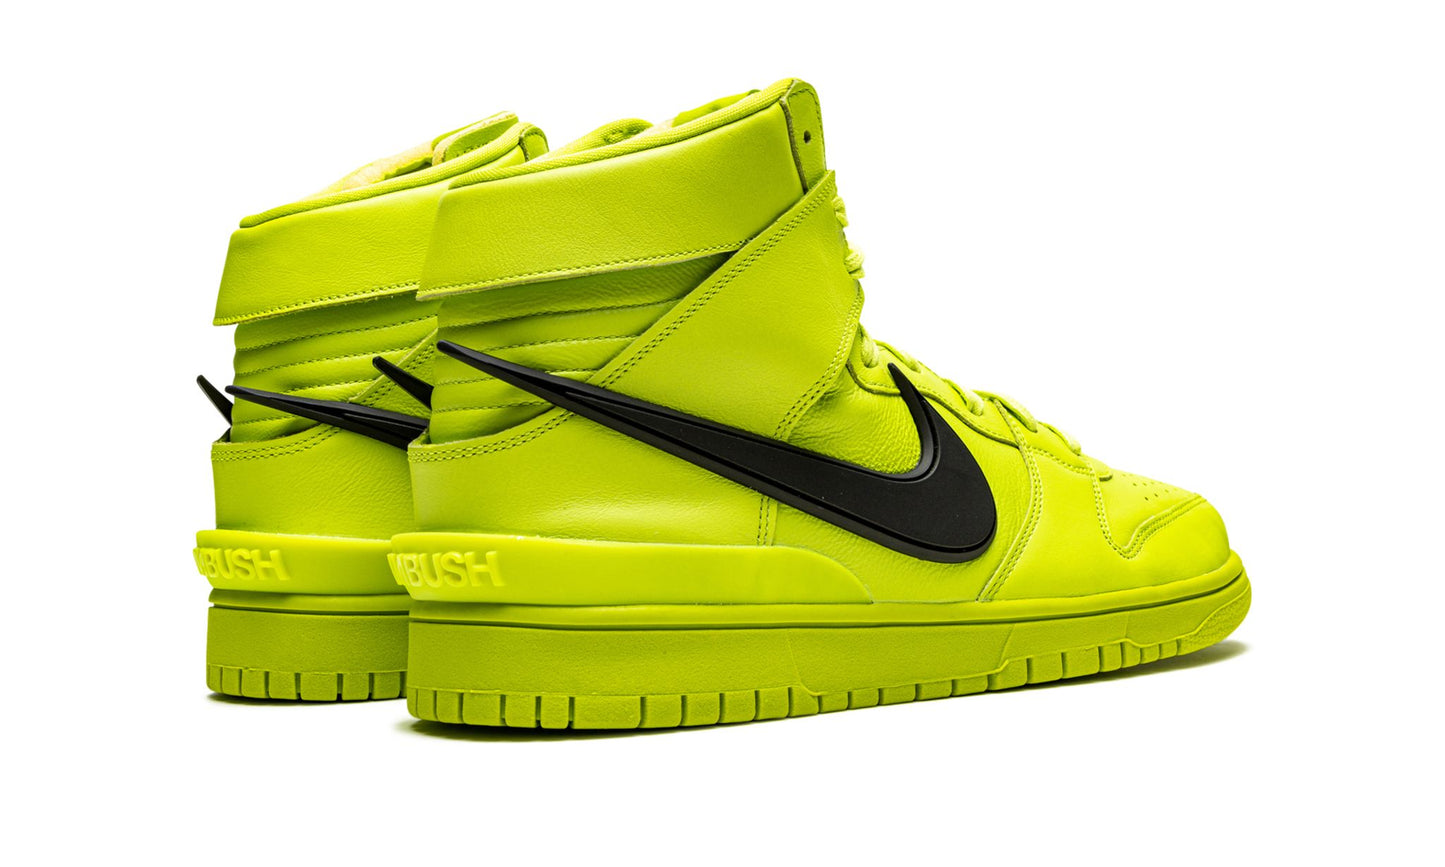 Nike Dunk High 'AMBUSH - Flash Lime'